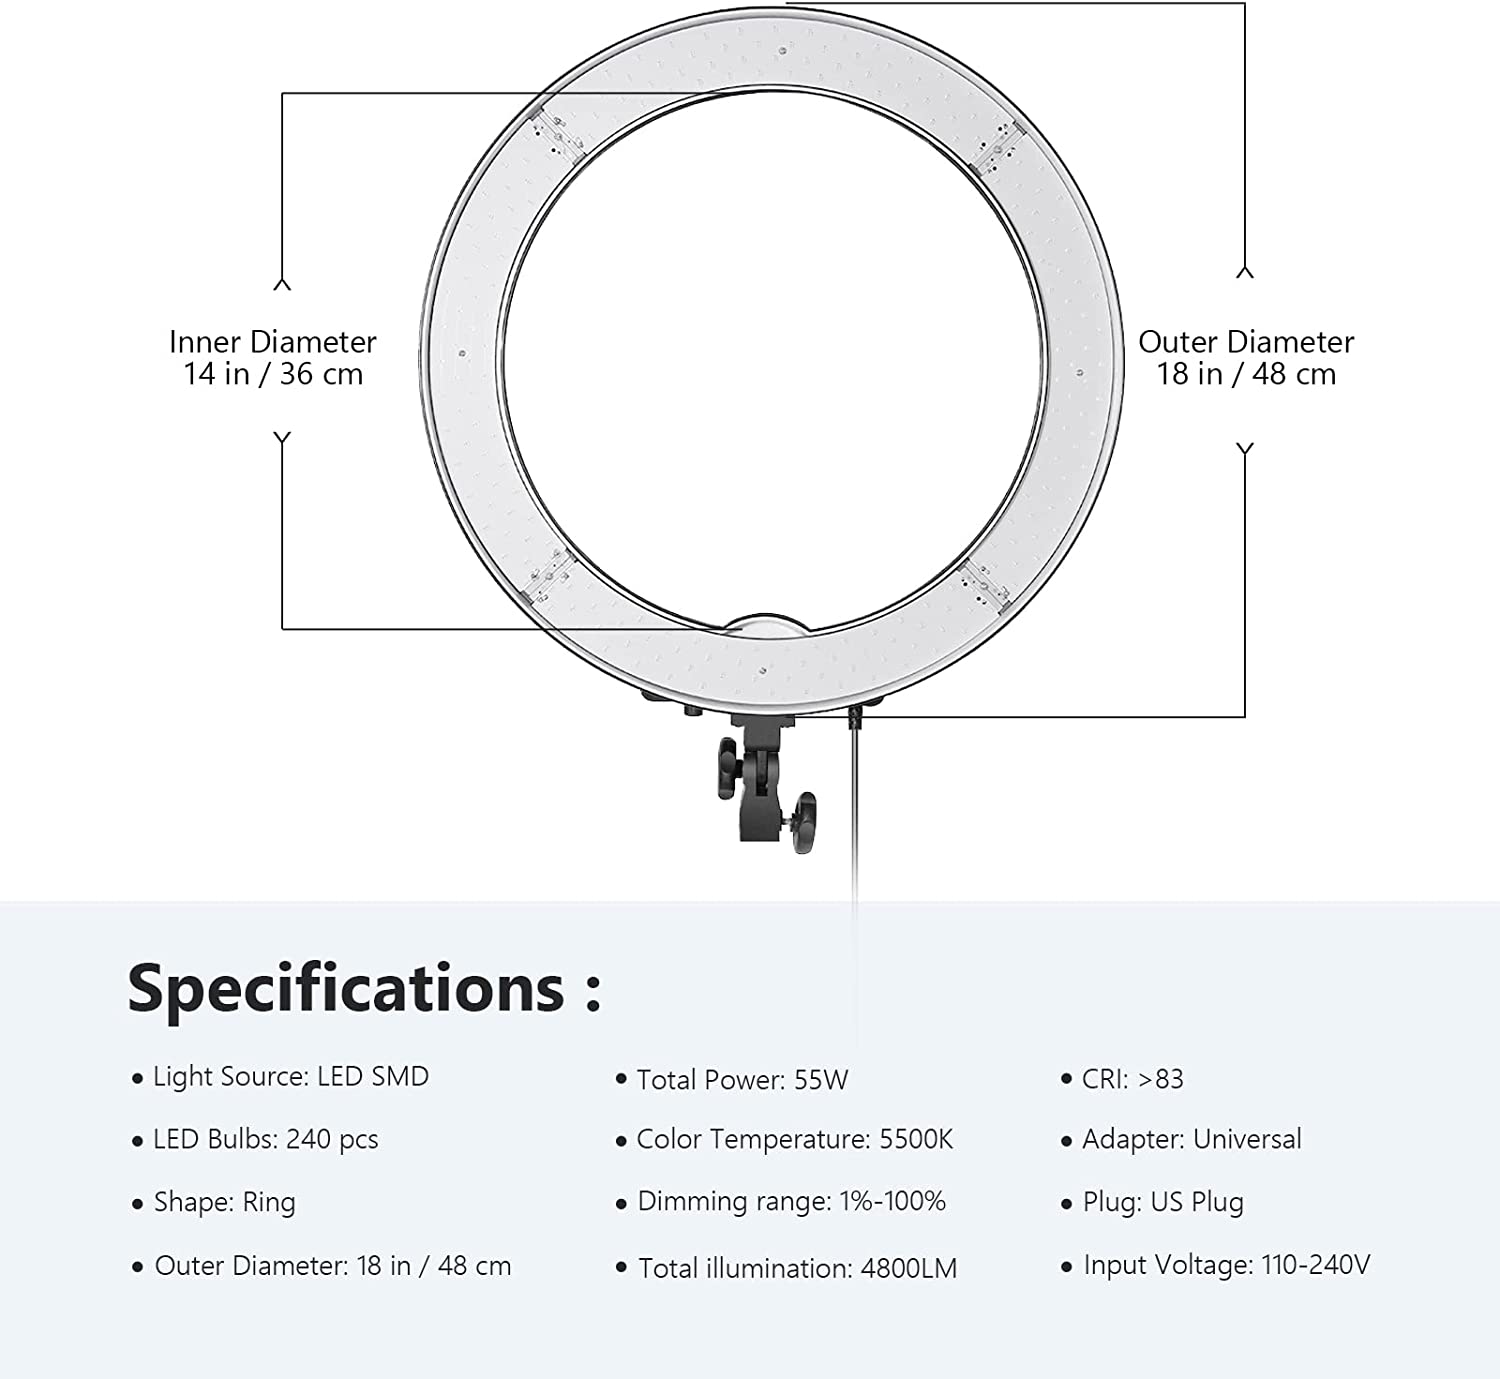 NEEWER RL-14 14 Inches LED Ring Light Kit - NEEWER – NEEWER.de